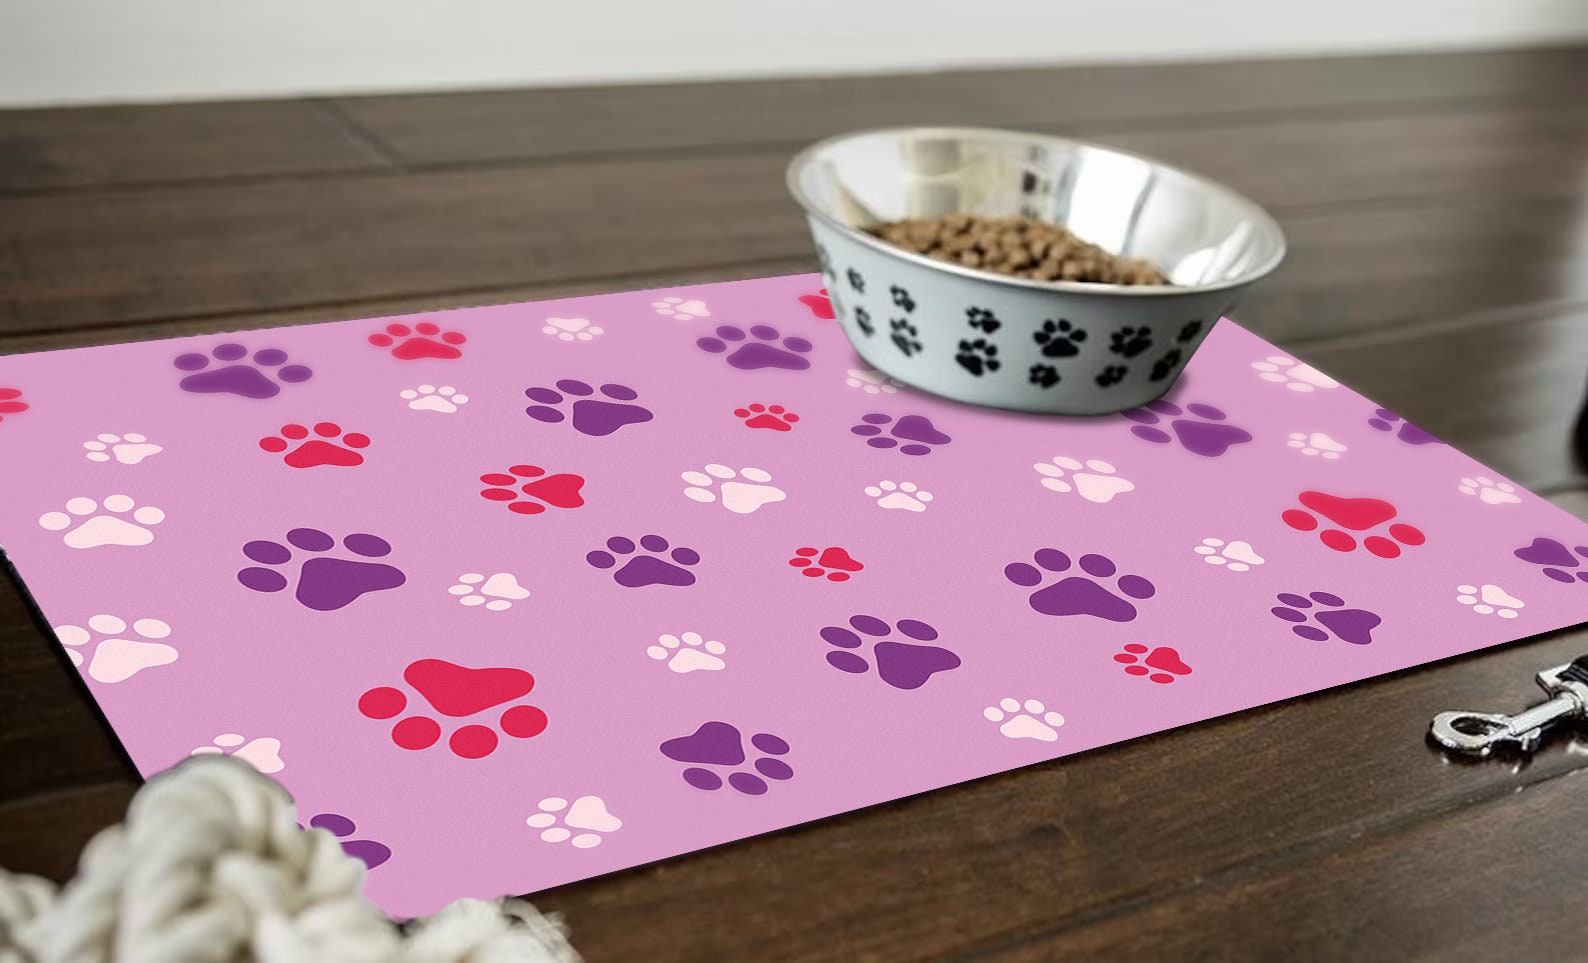 Americat Company: Waterproof Cat Food & Water Placemat - Paw Prints